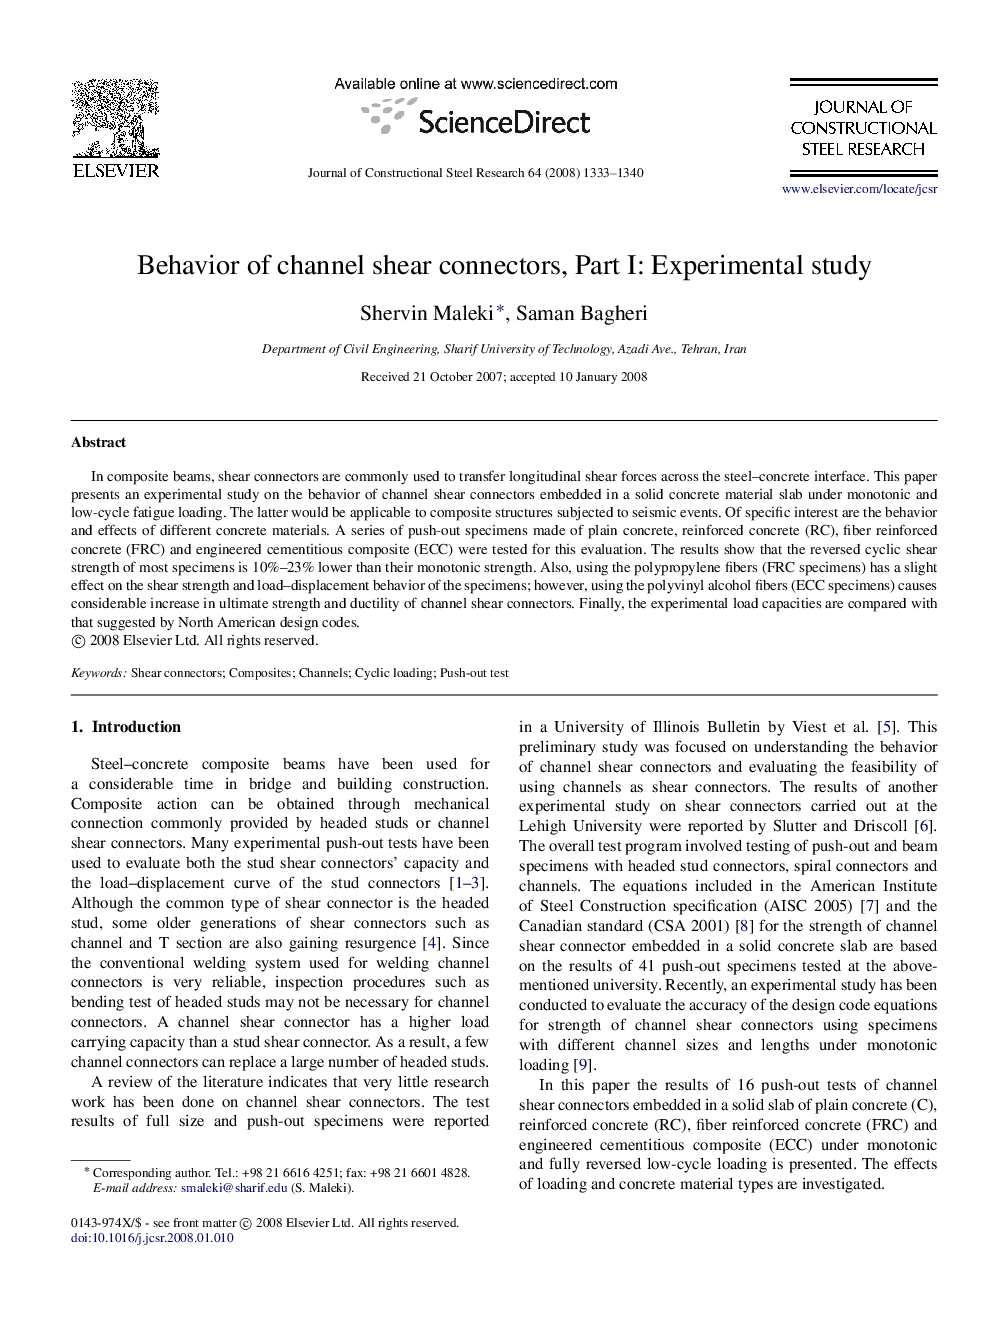 Behavior of channel shear connectors, Part I: Experimental study